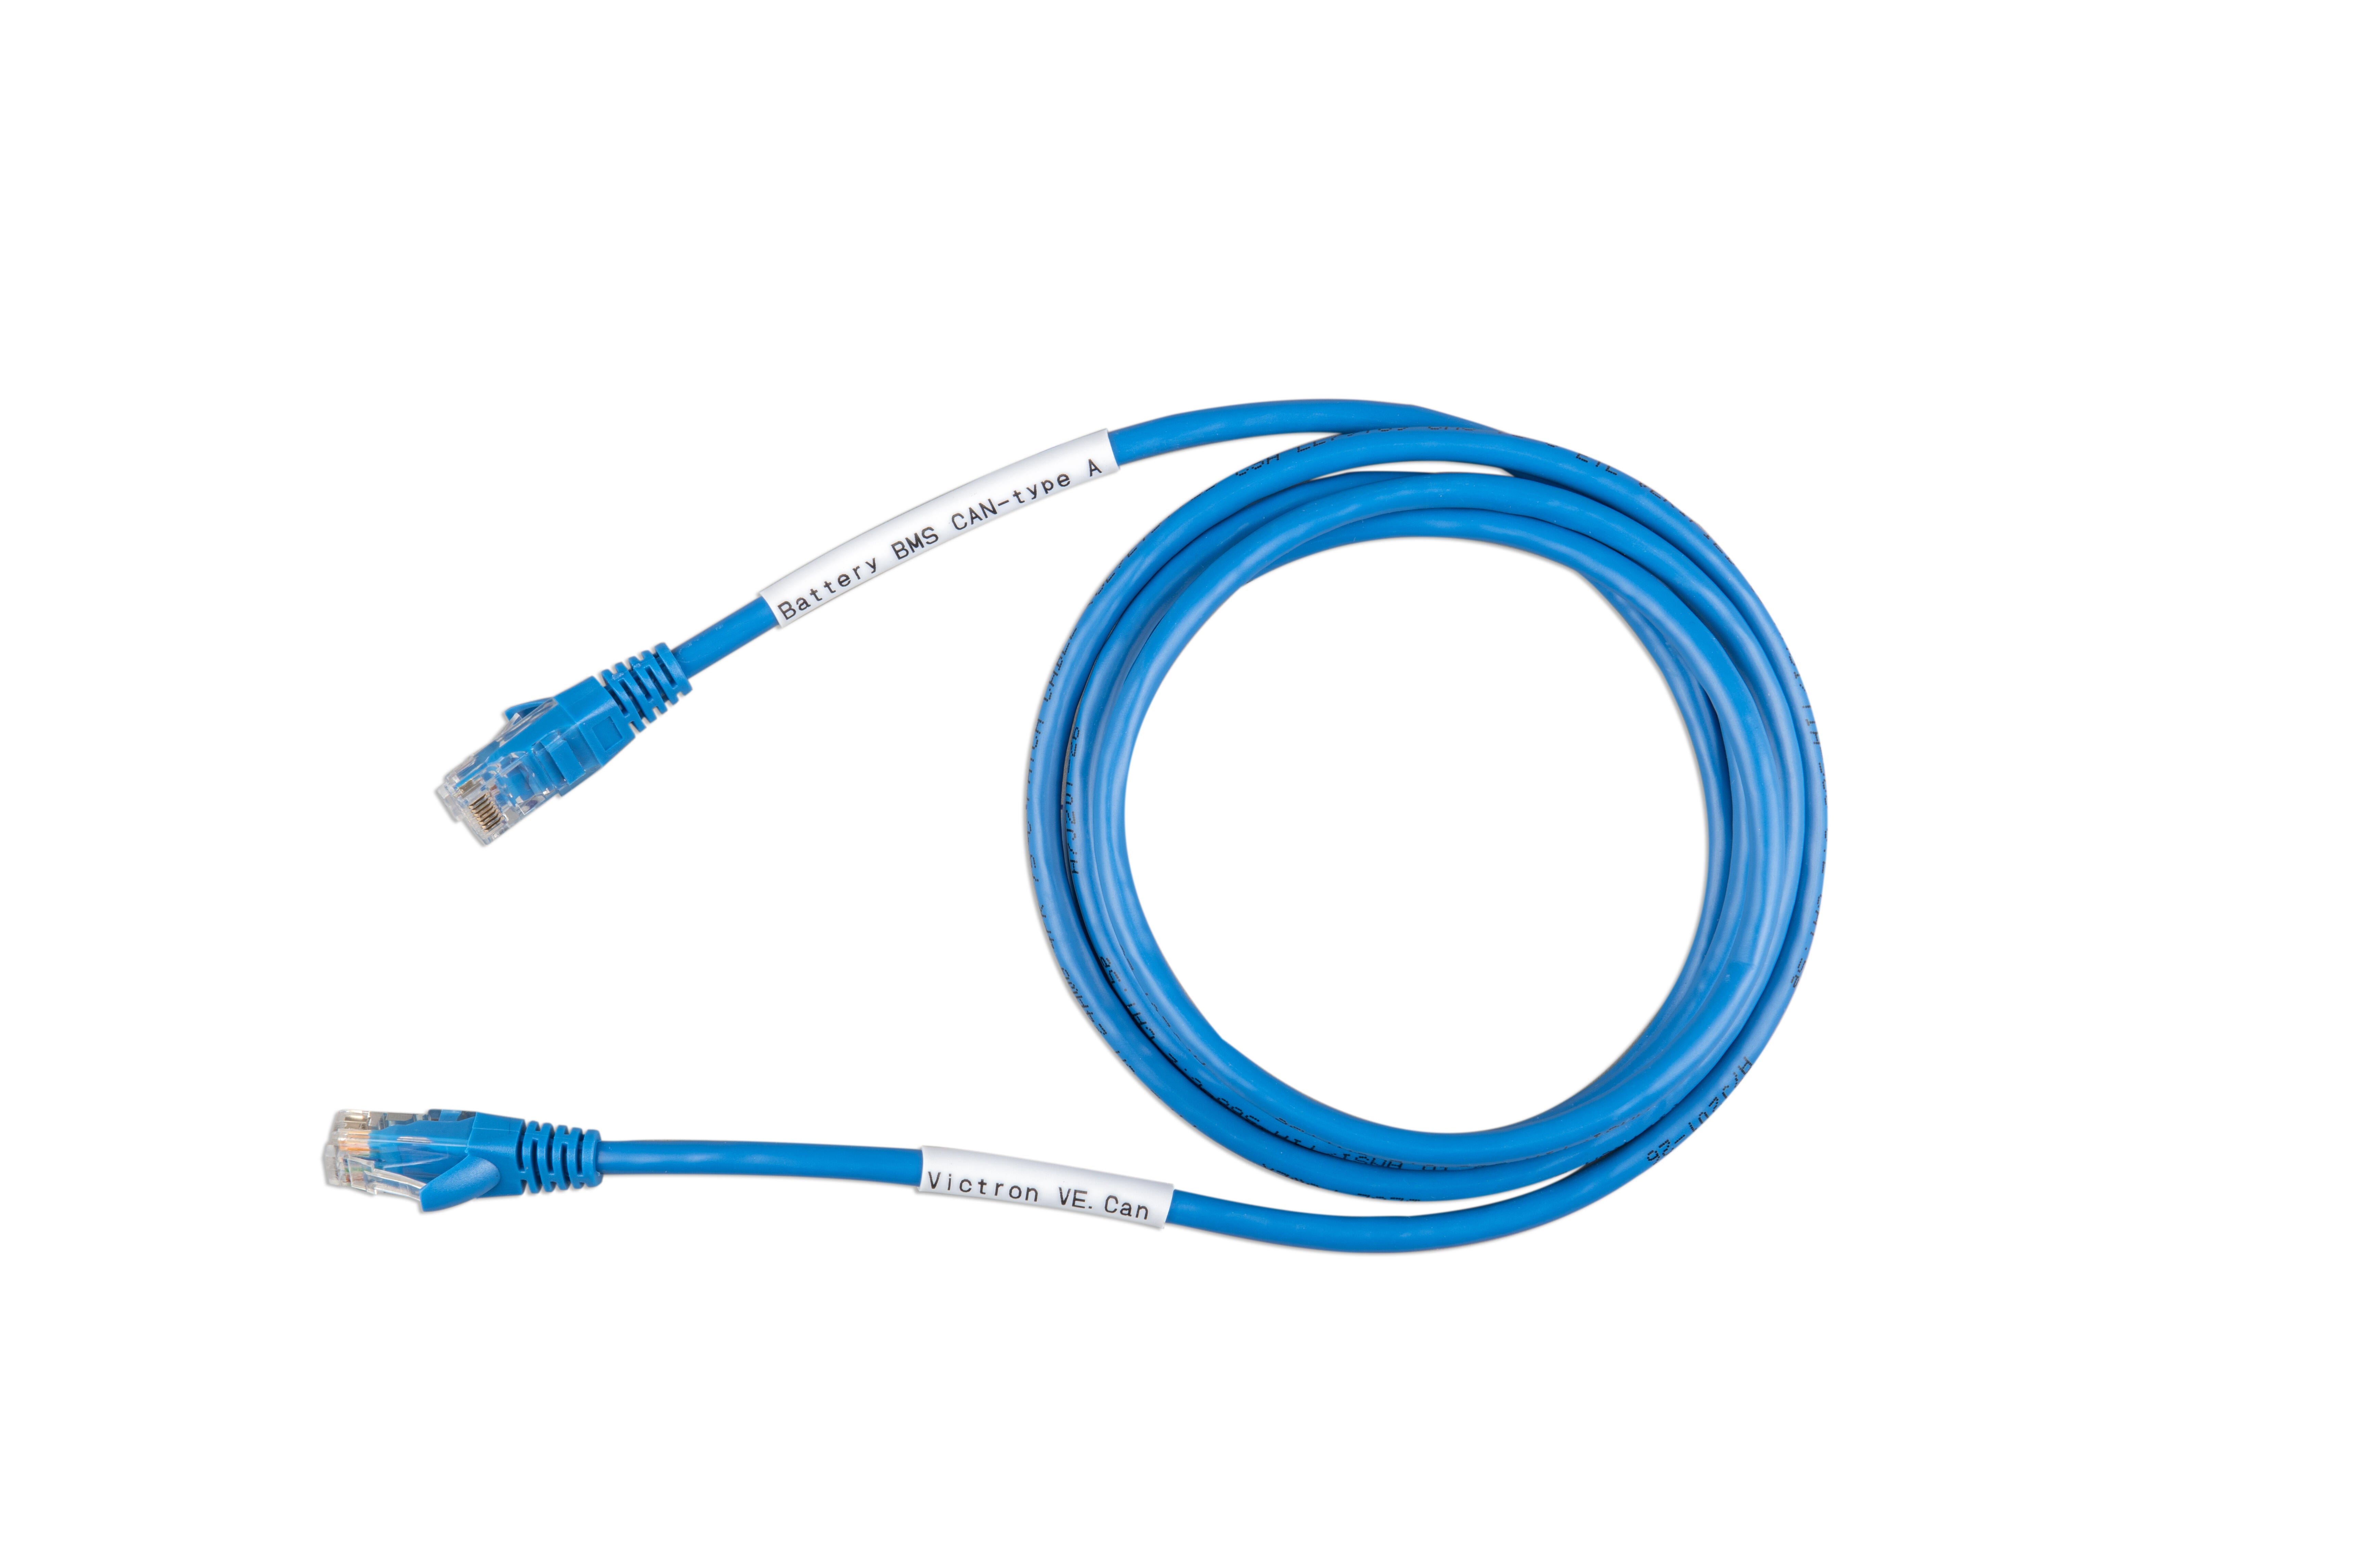 Cable victron ve.can-can bus bms a de 1.8 m